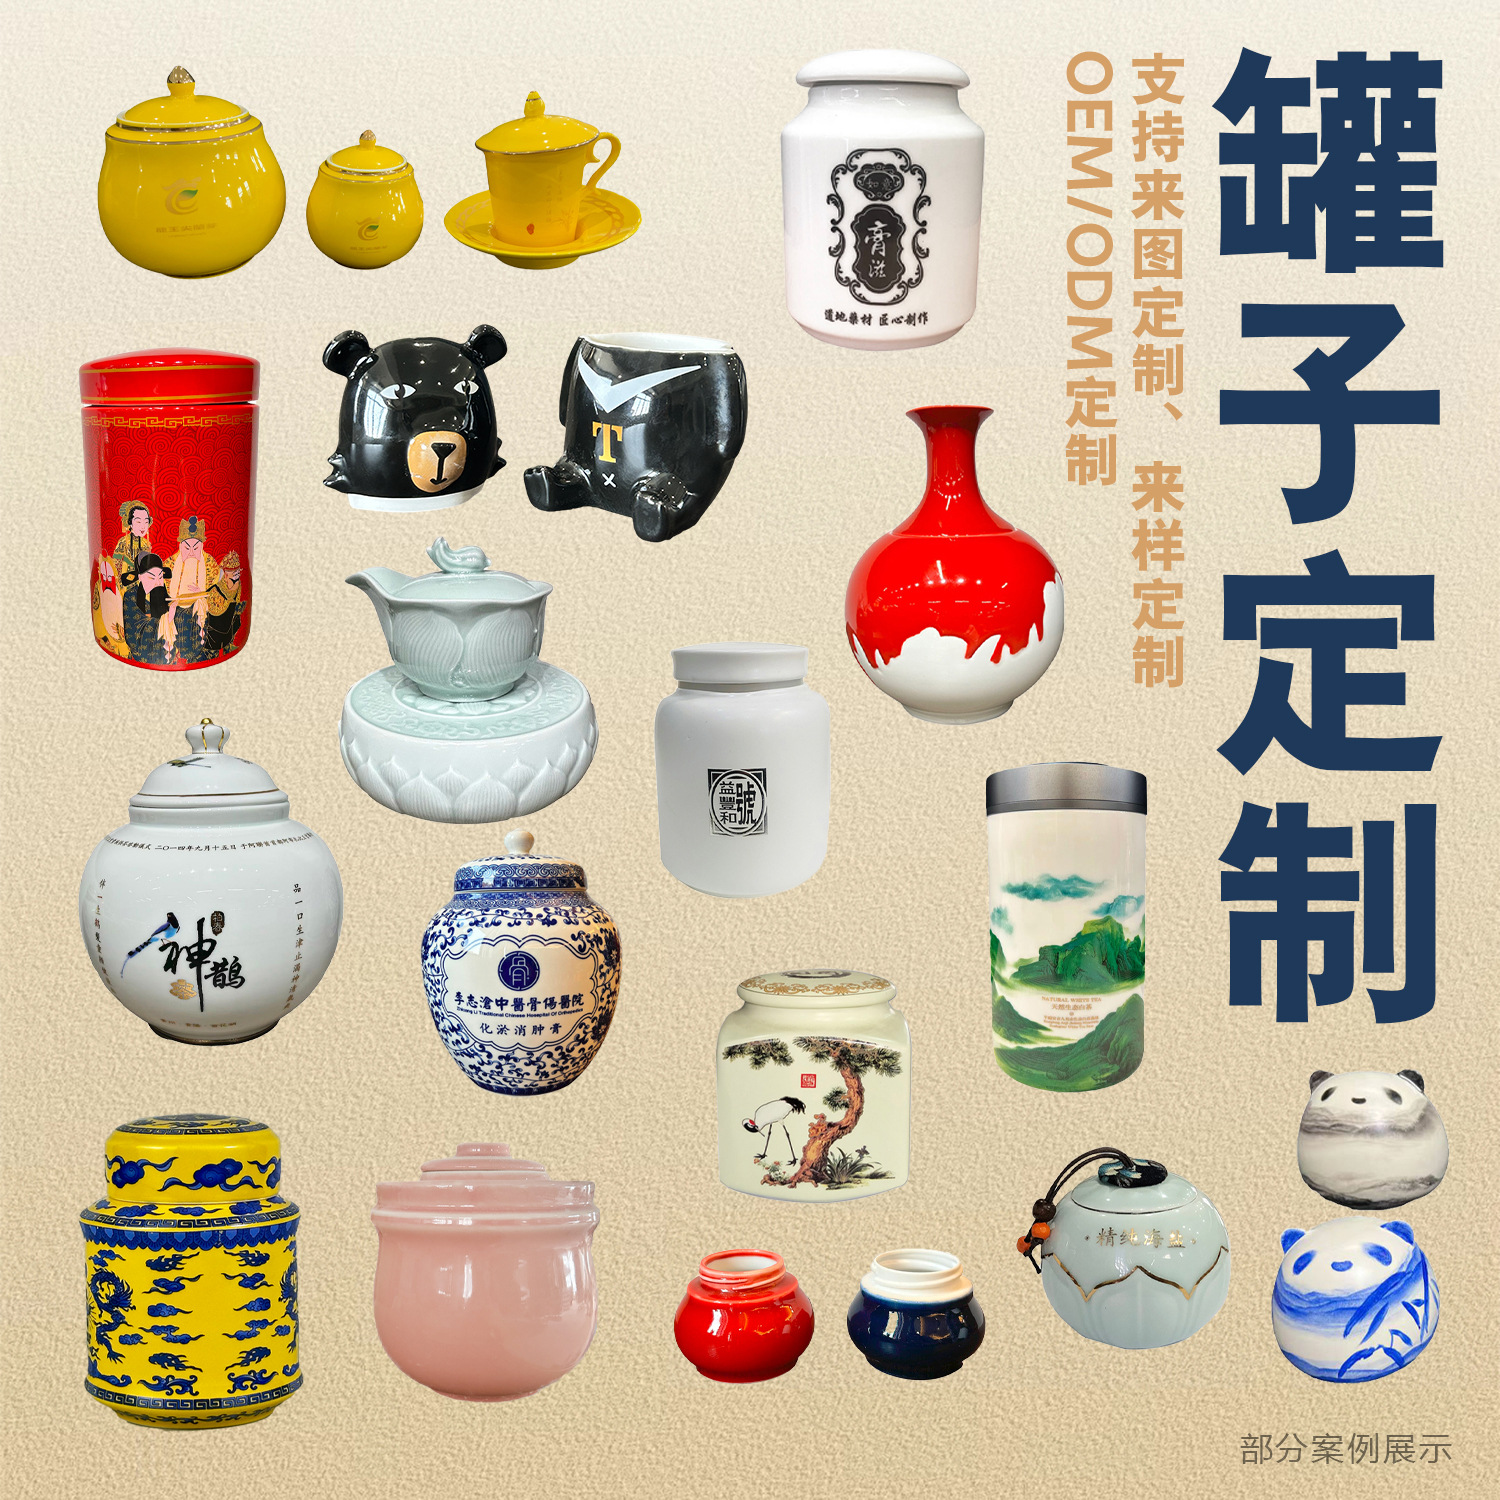 Jingde Large Ceramic Source Factory Tableware, Ceramic Dish, Tea Set, Jar Gift Graphic Customization